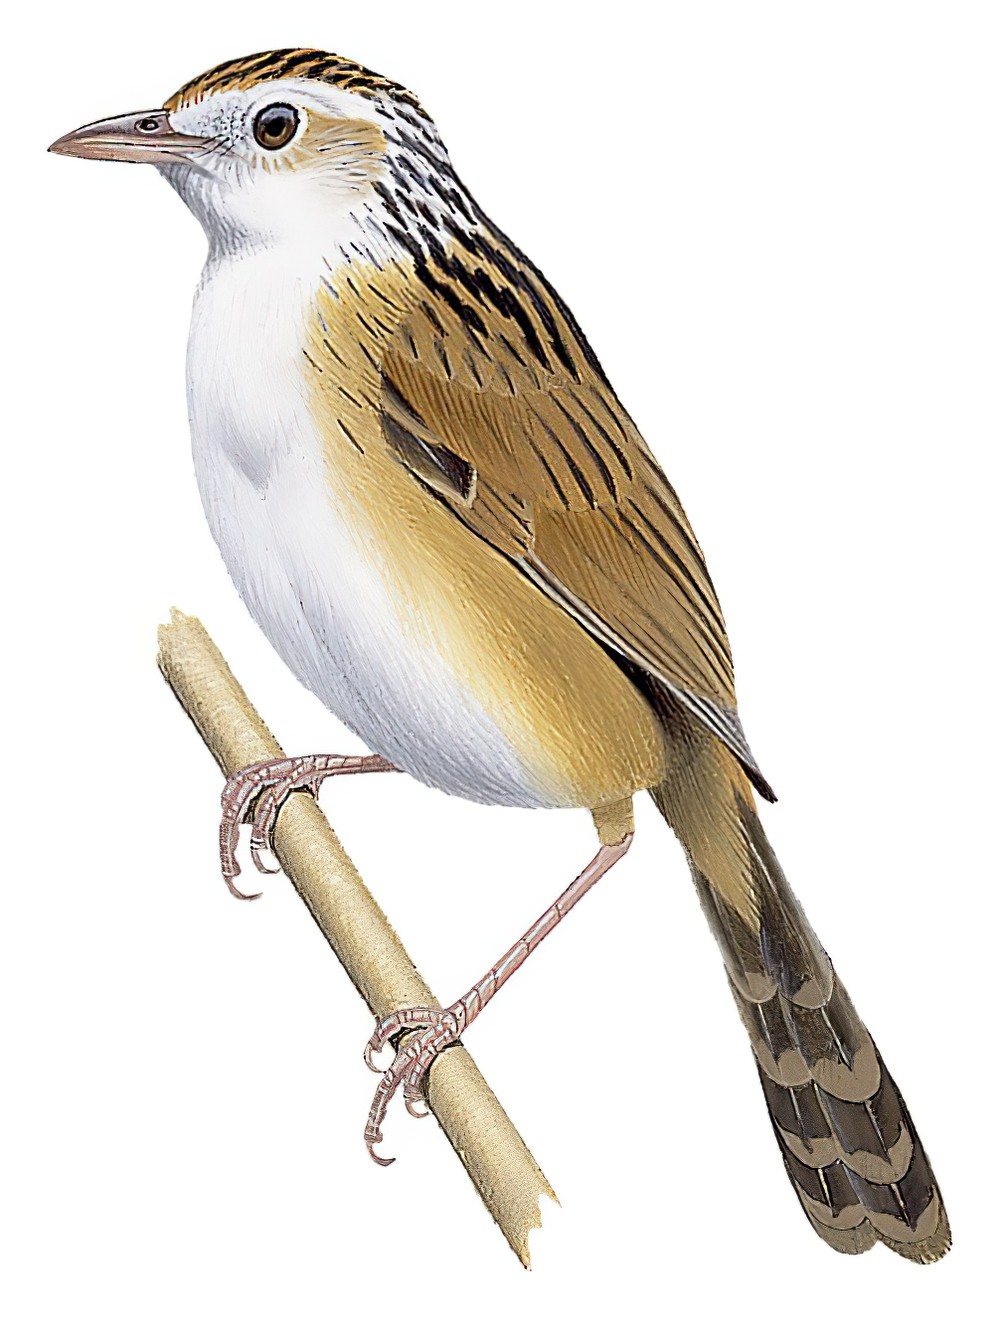 南亚大草莺 / Indian Grassbird / Graminicola bengalensis